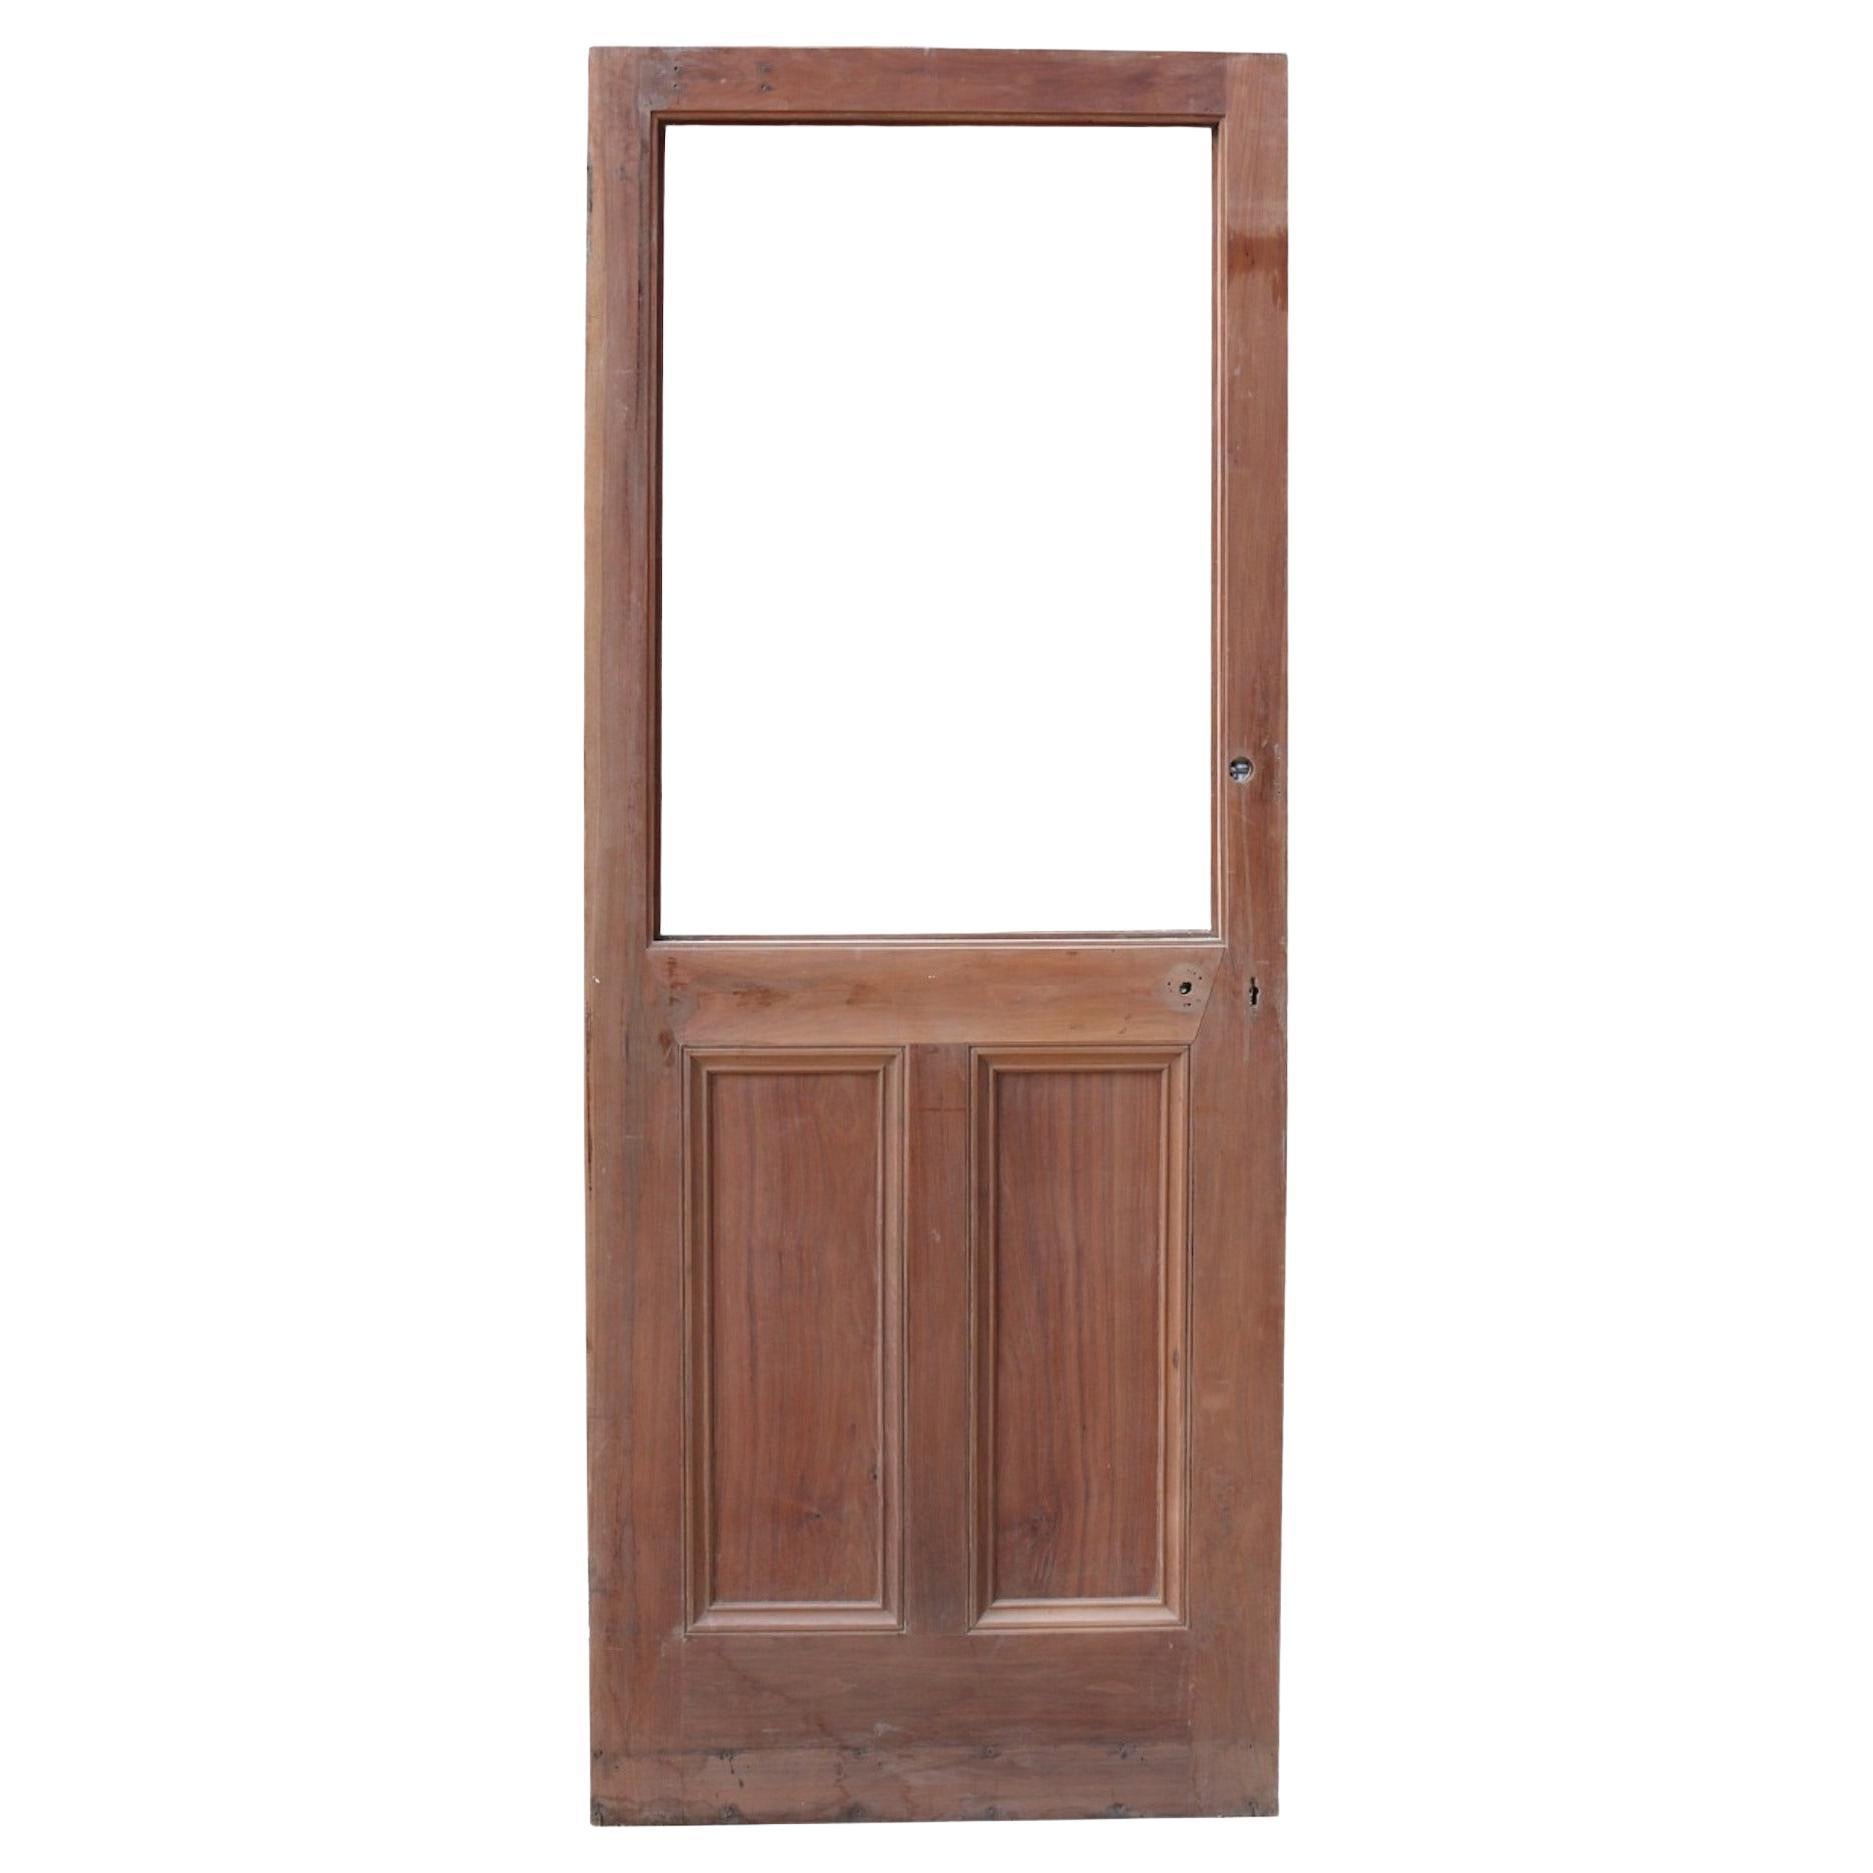 Early 20th Century Walnut Door For Sale